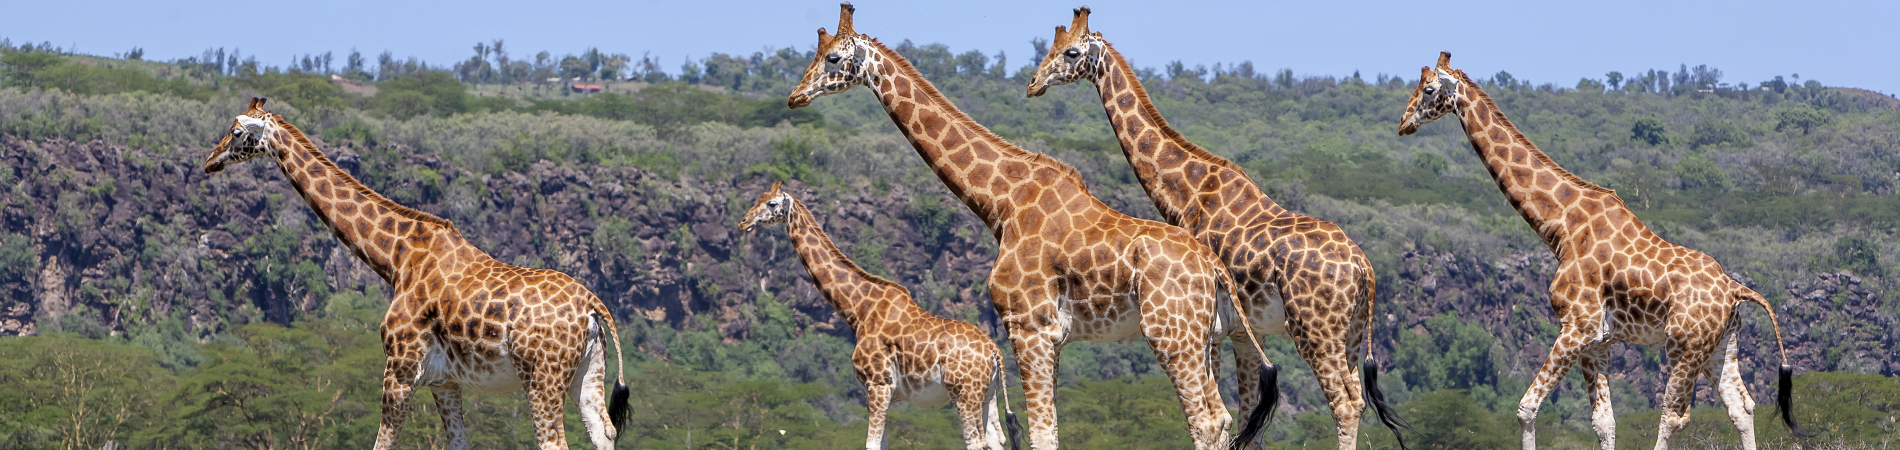 Image for A Wild Adventure: Safari in Africa